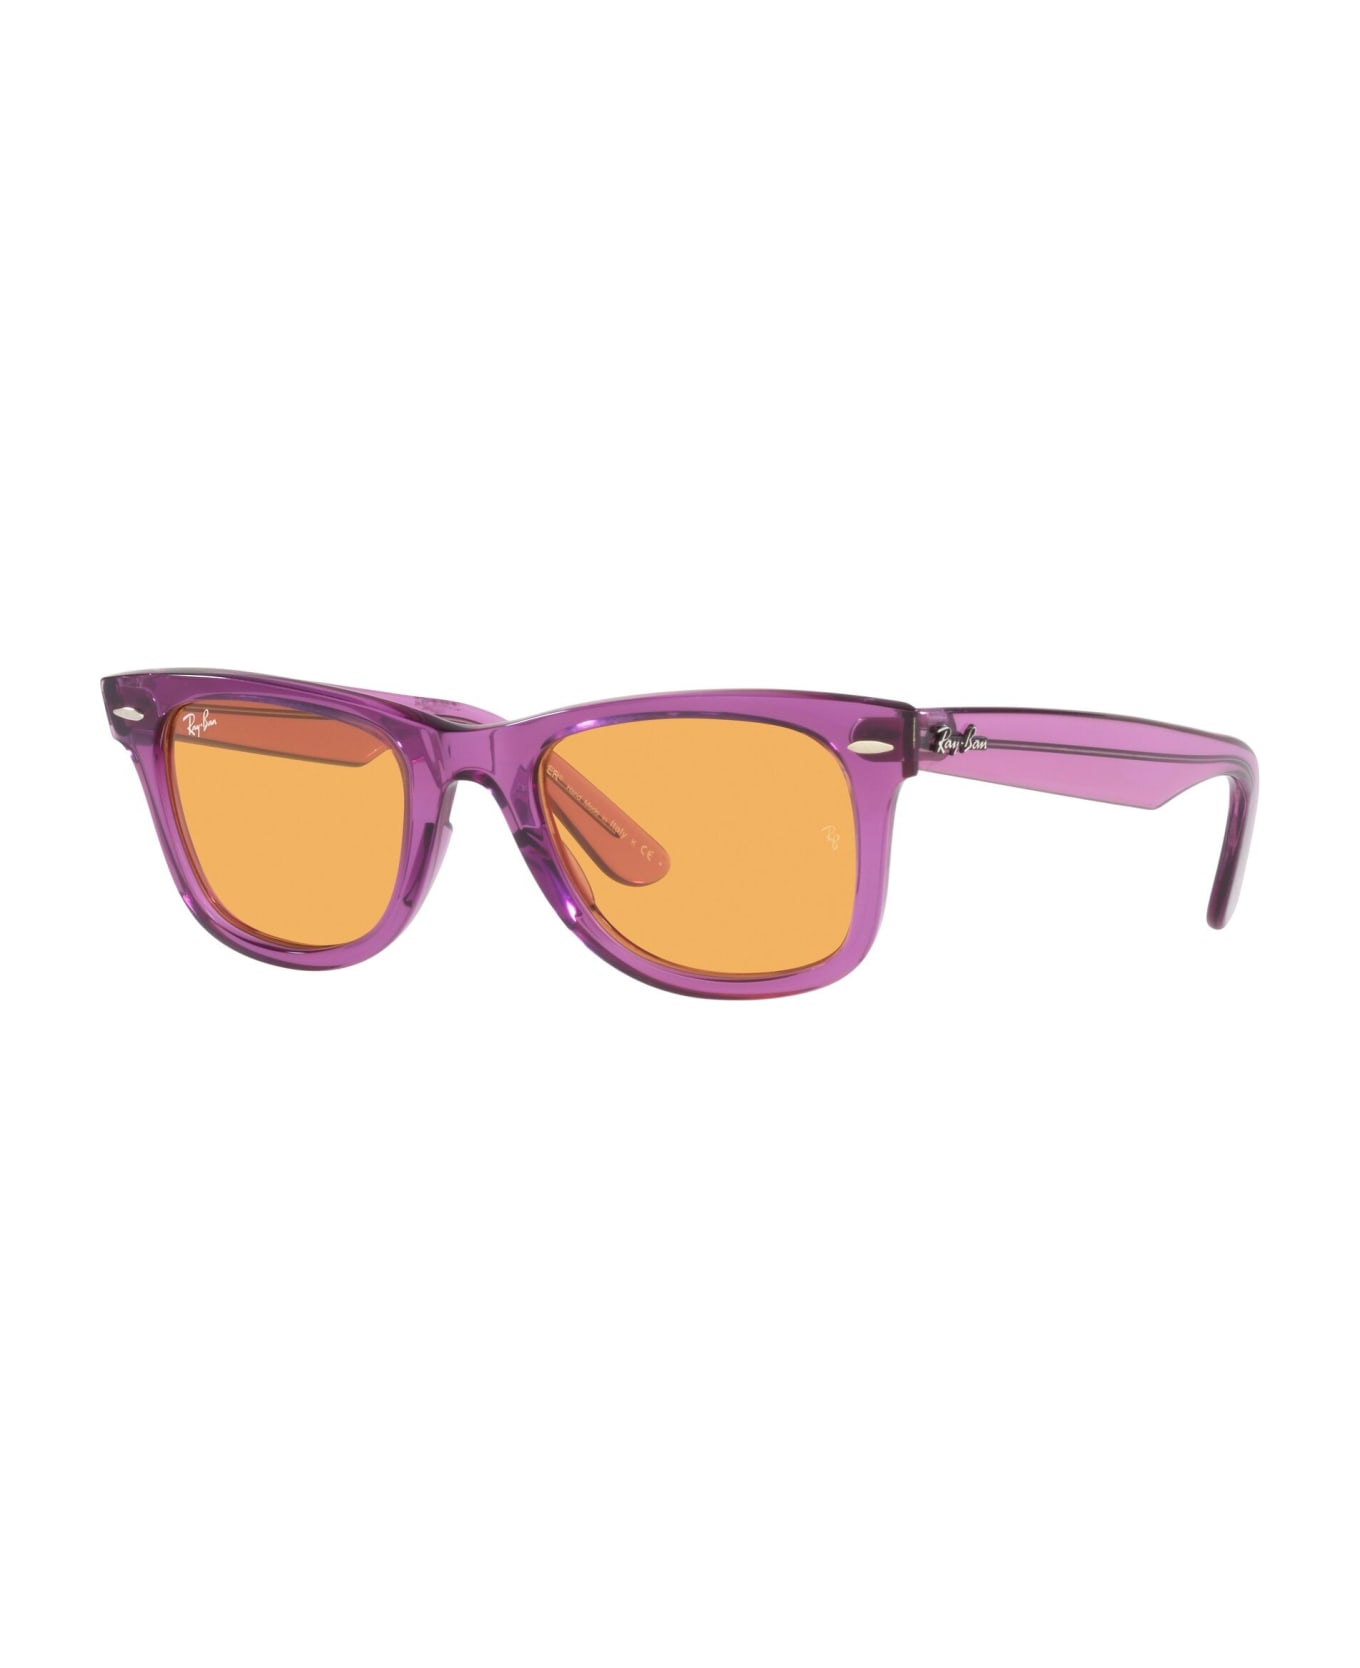 Ray-Ban Eyewear - Viola/Arancione